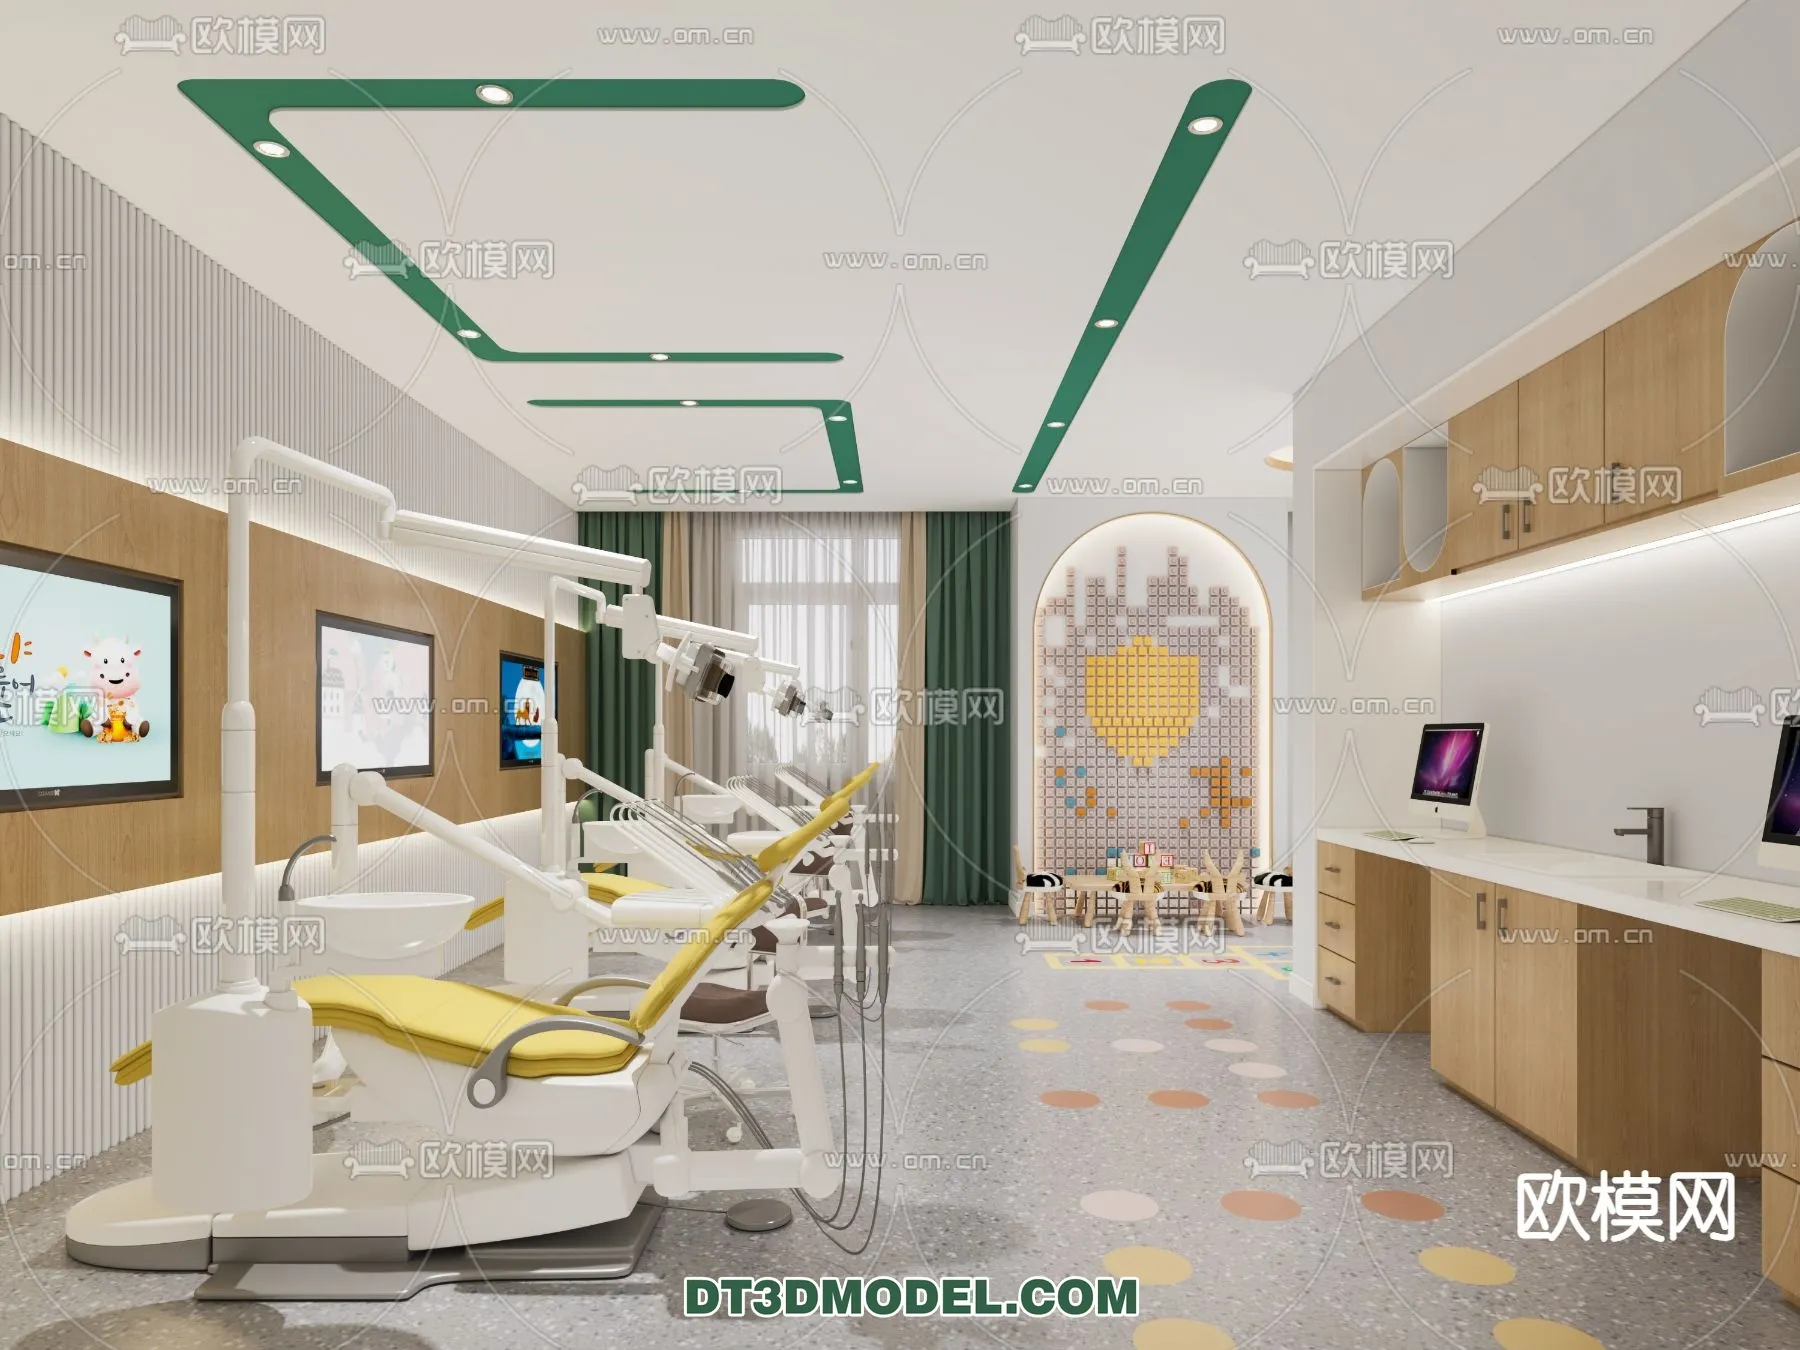 HOSPITAL 3D SCENES – MODERN – 0007